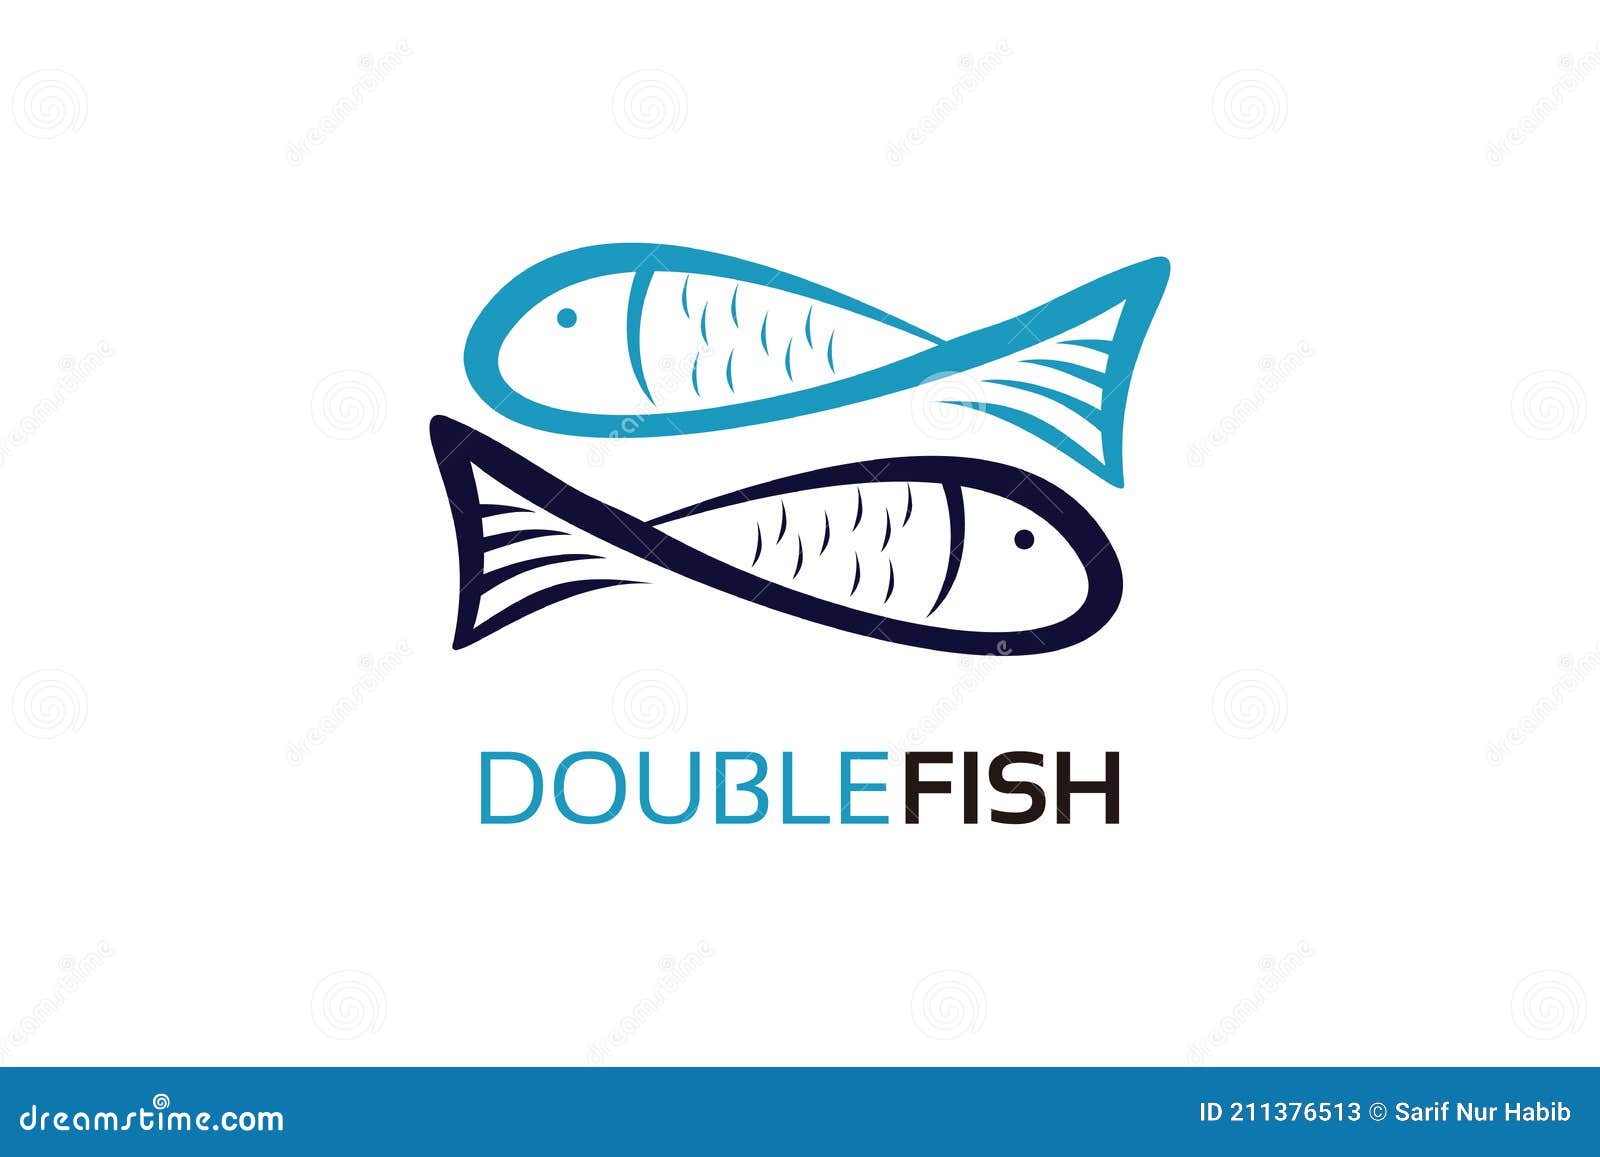 Double Fish Logo Design Template Stock Vector - Illustration of